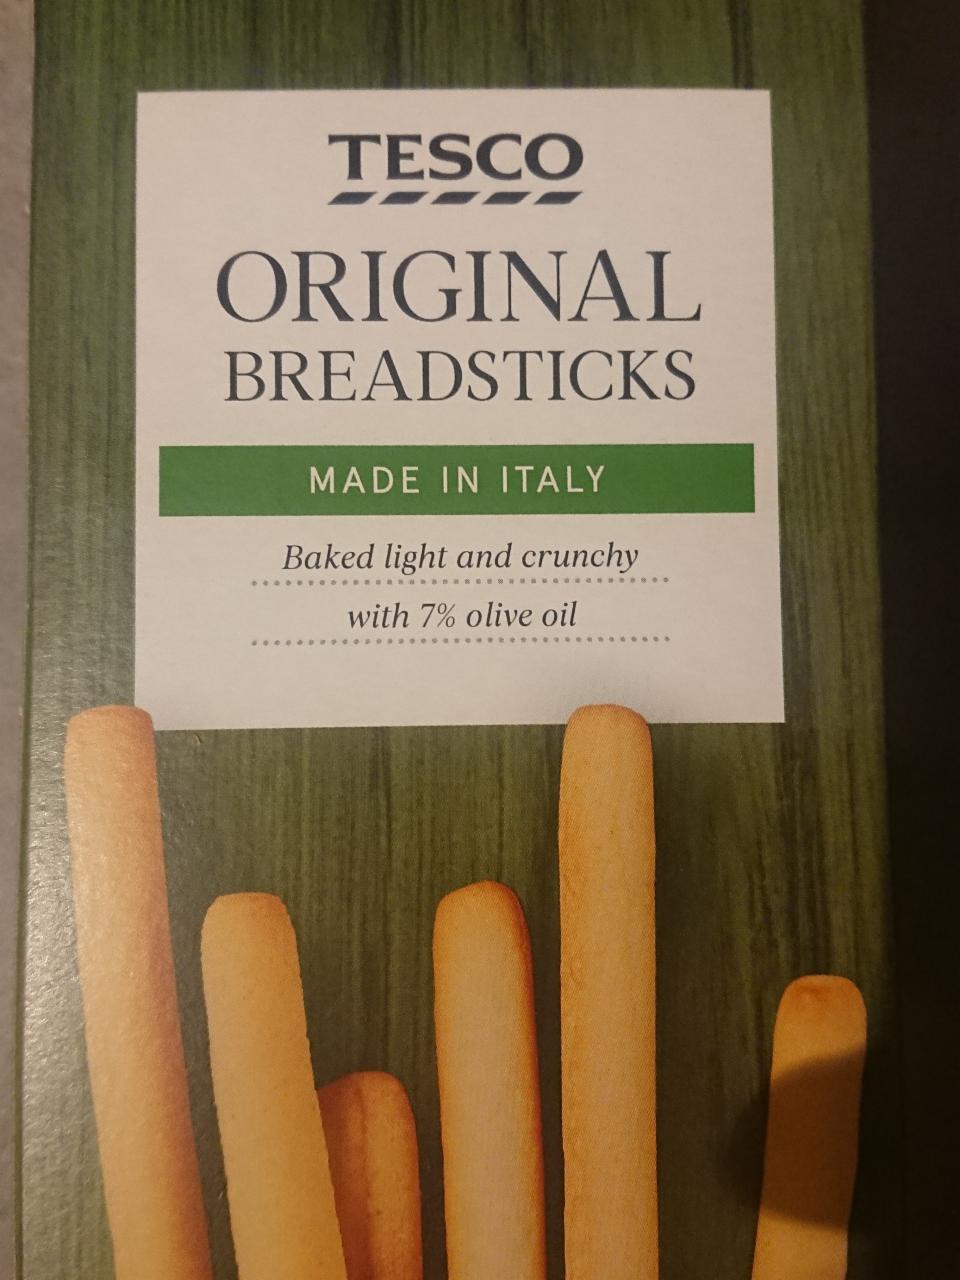 Fotografie - Original breadsticks Made in Italy Tesco